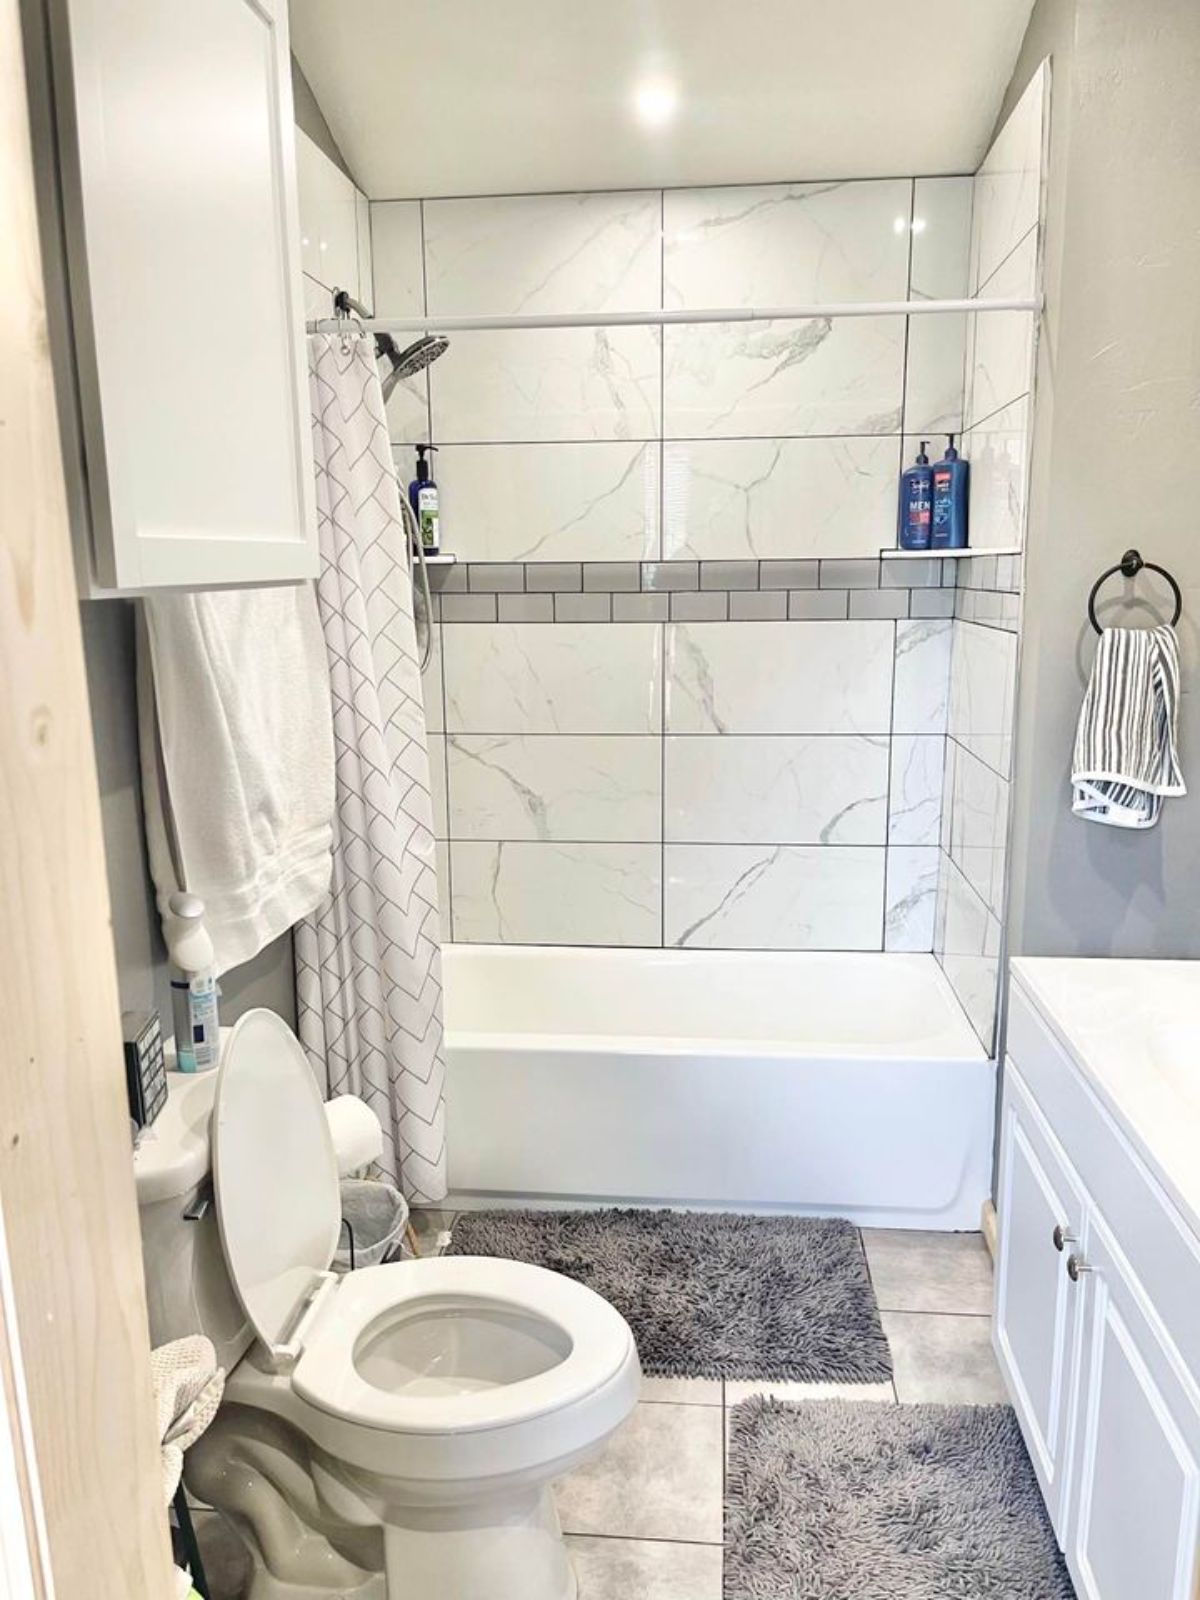 Toilet and bathtub in washroom of 42’ Tiny House